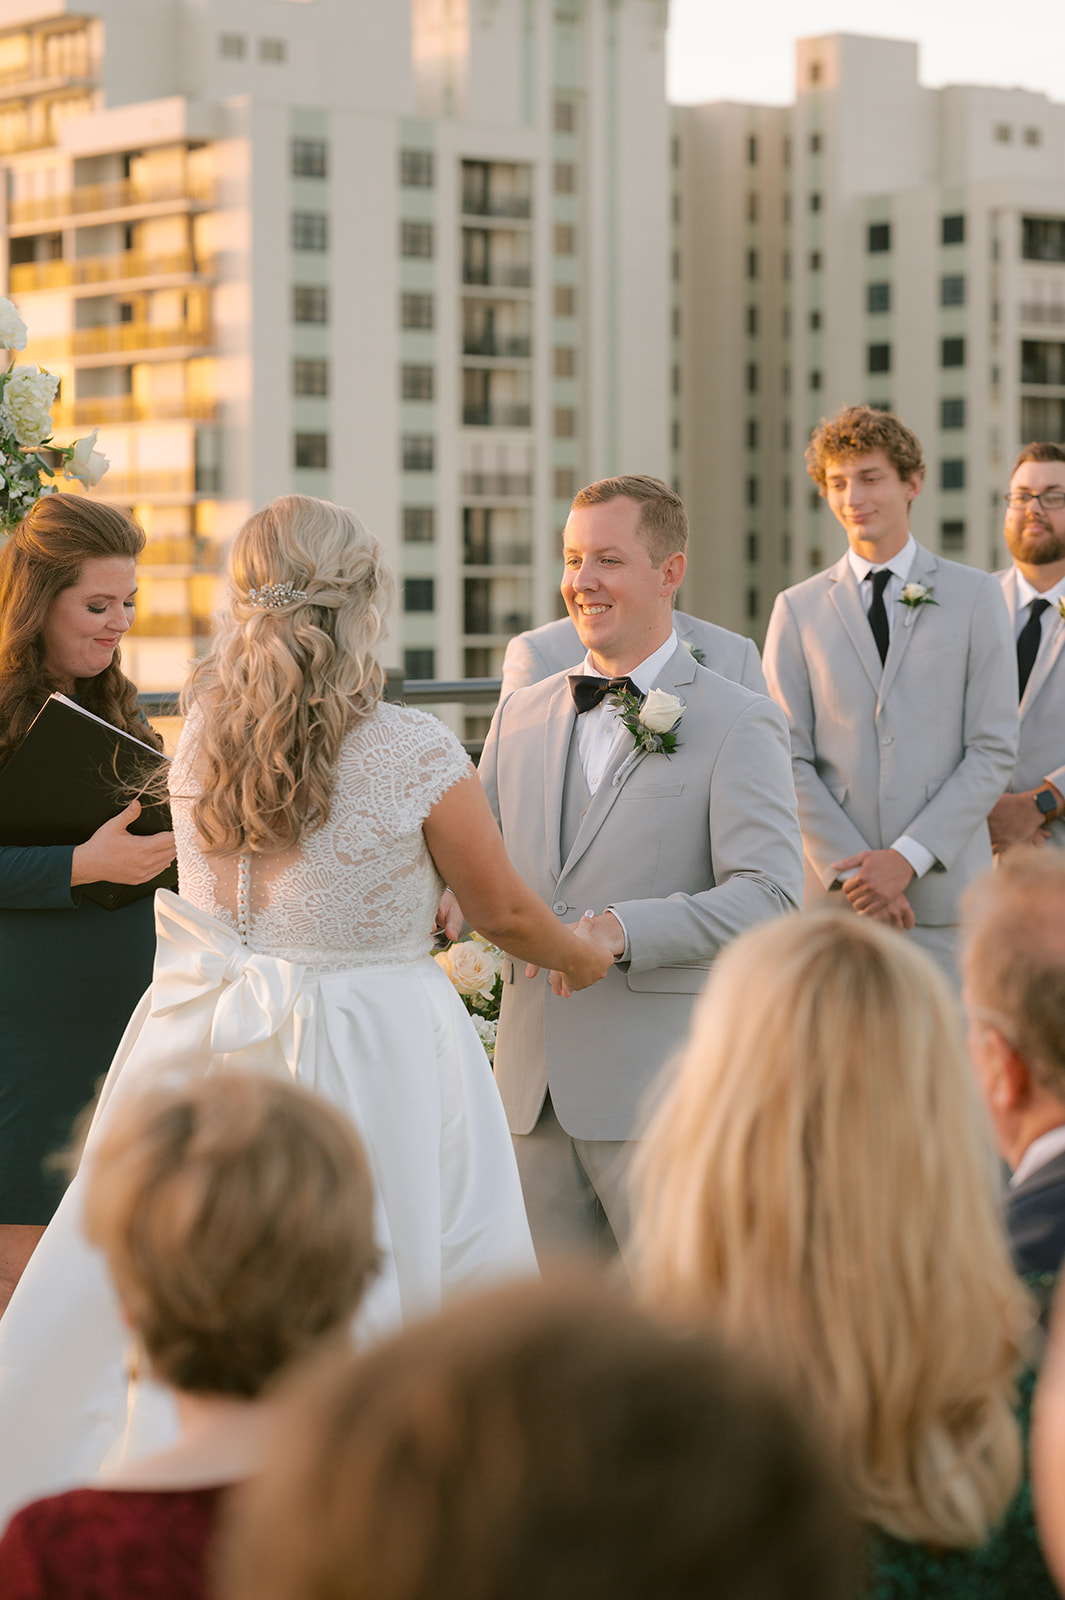 Hotel Zamora Wedding Ceremony: Bride and Groom's Sweet Kiss under the Sun
